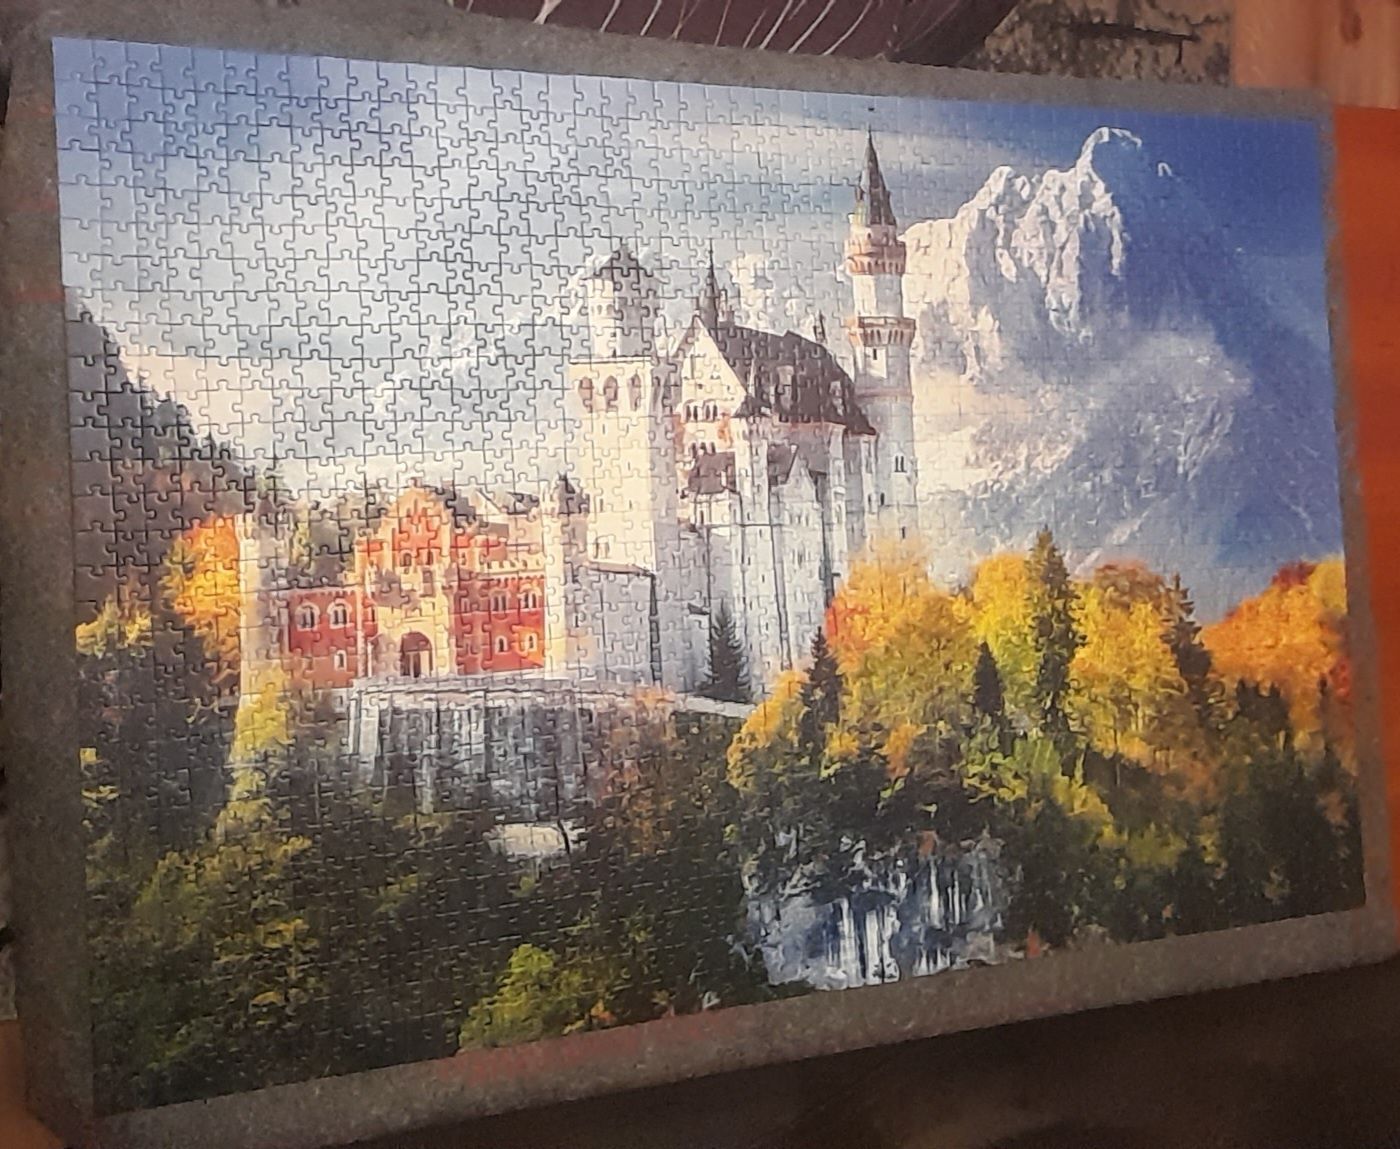 Puzzle 1500 zamek